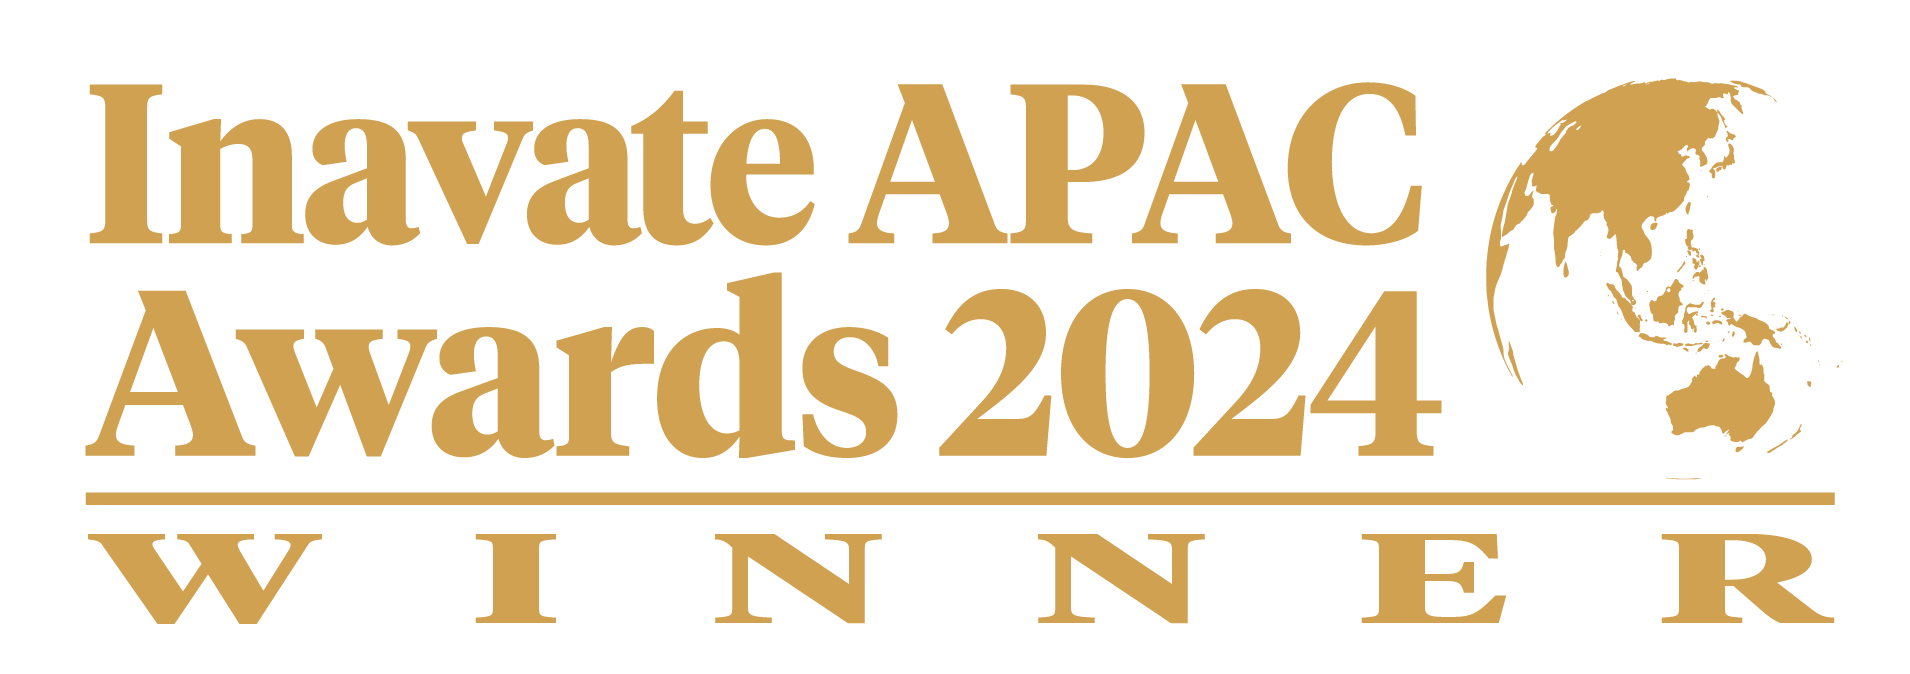 Inavate APAC Awards 2024 LOGO winner Gold